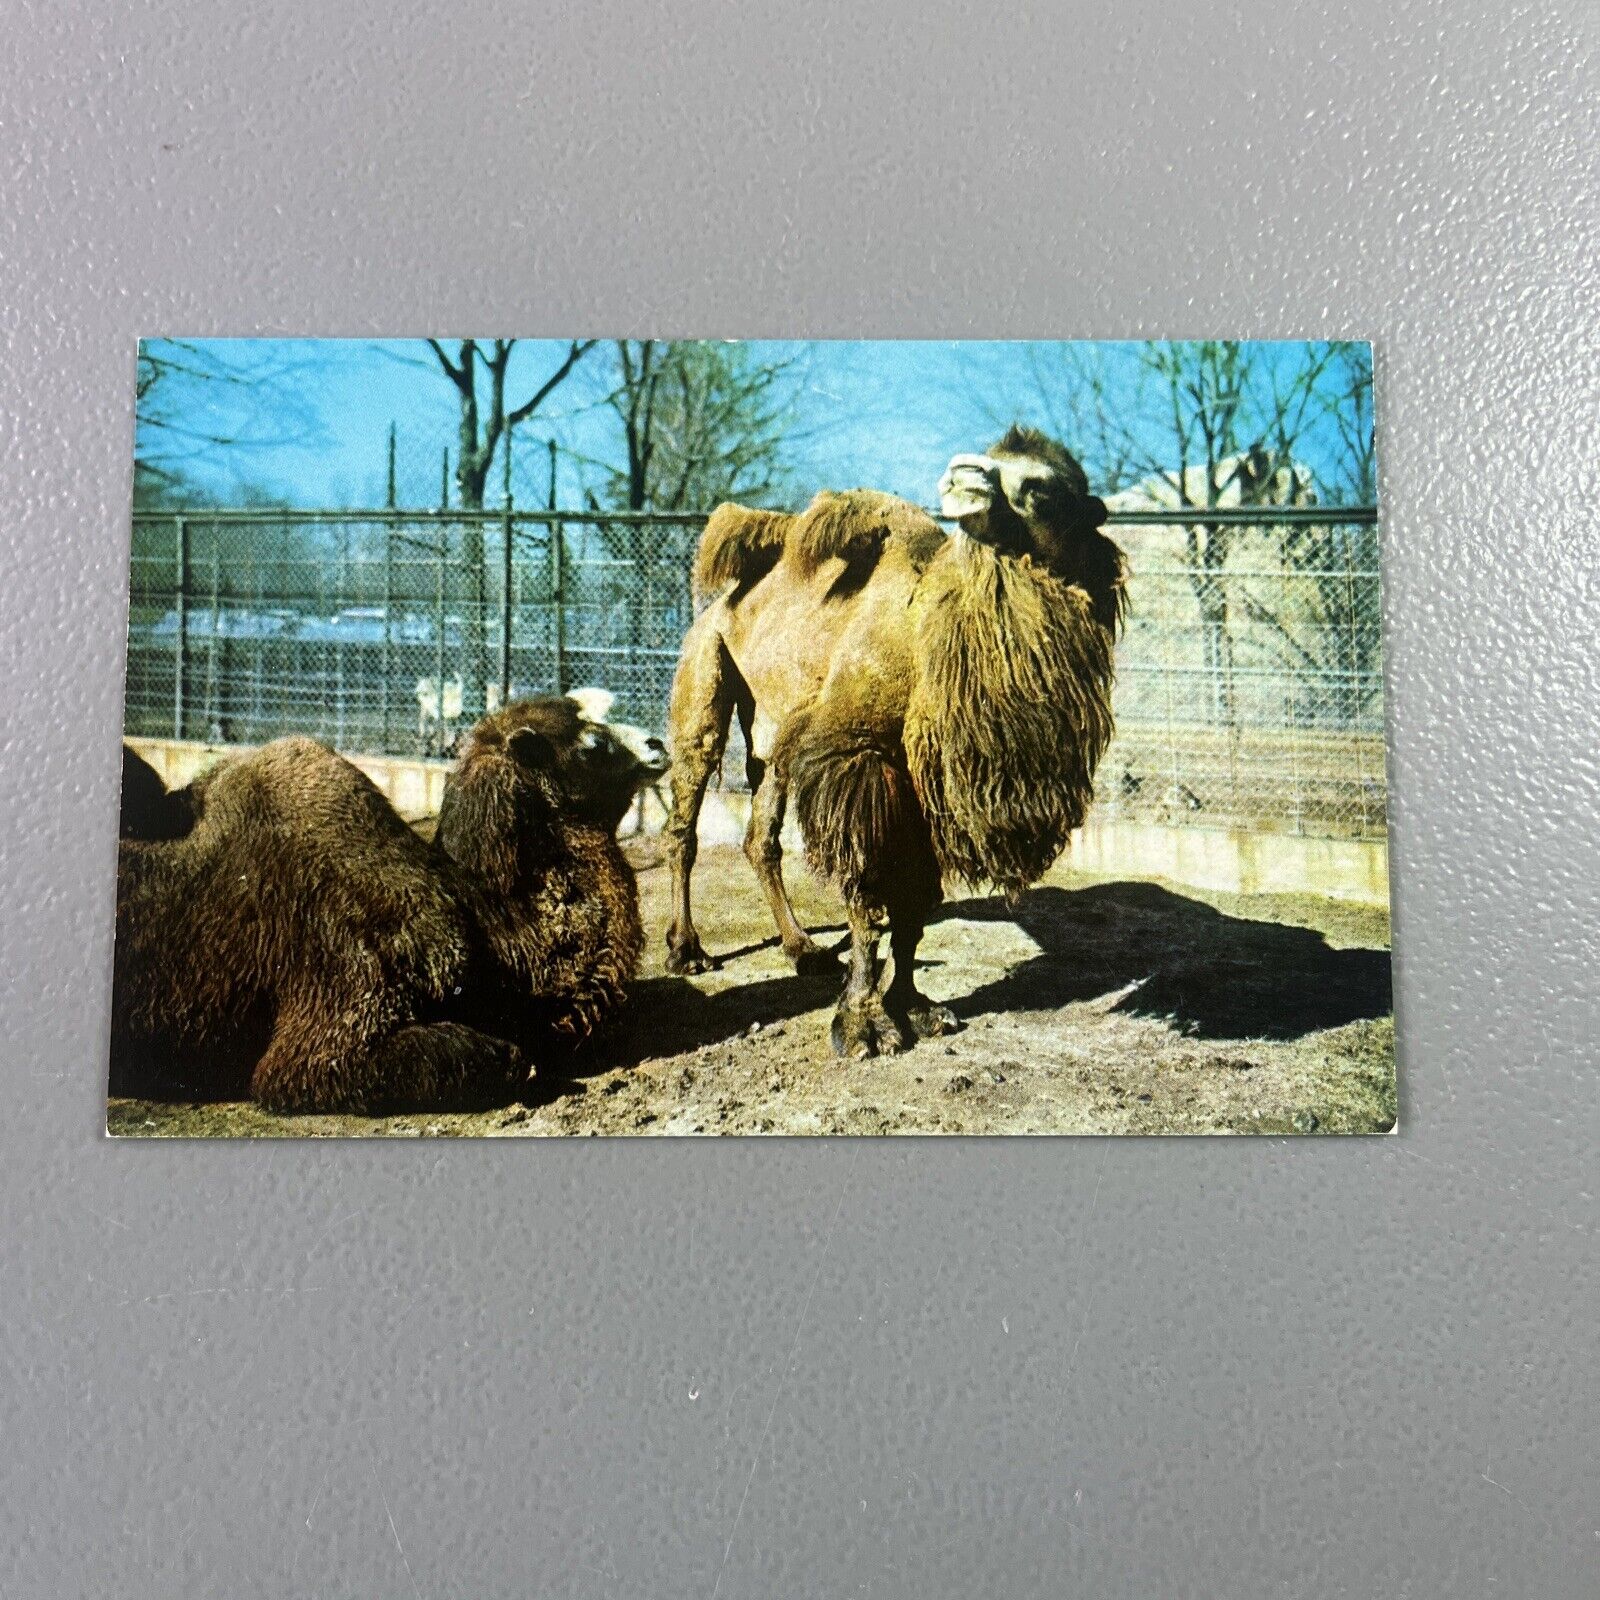 Bactrian Camels - National Zoological Park - Washington DC - Postcard